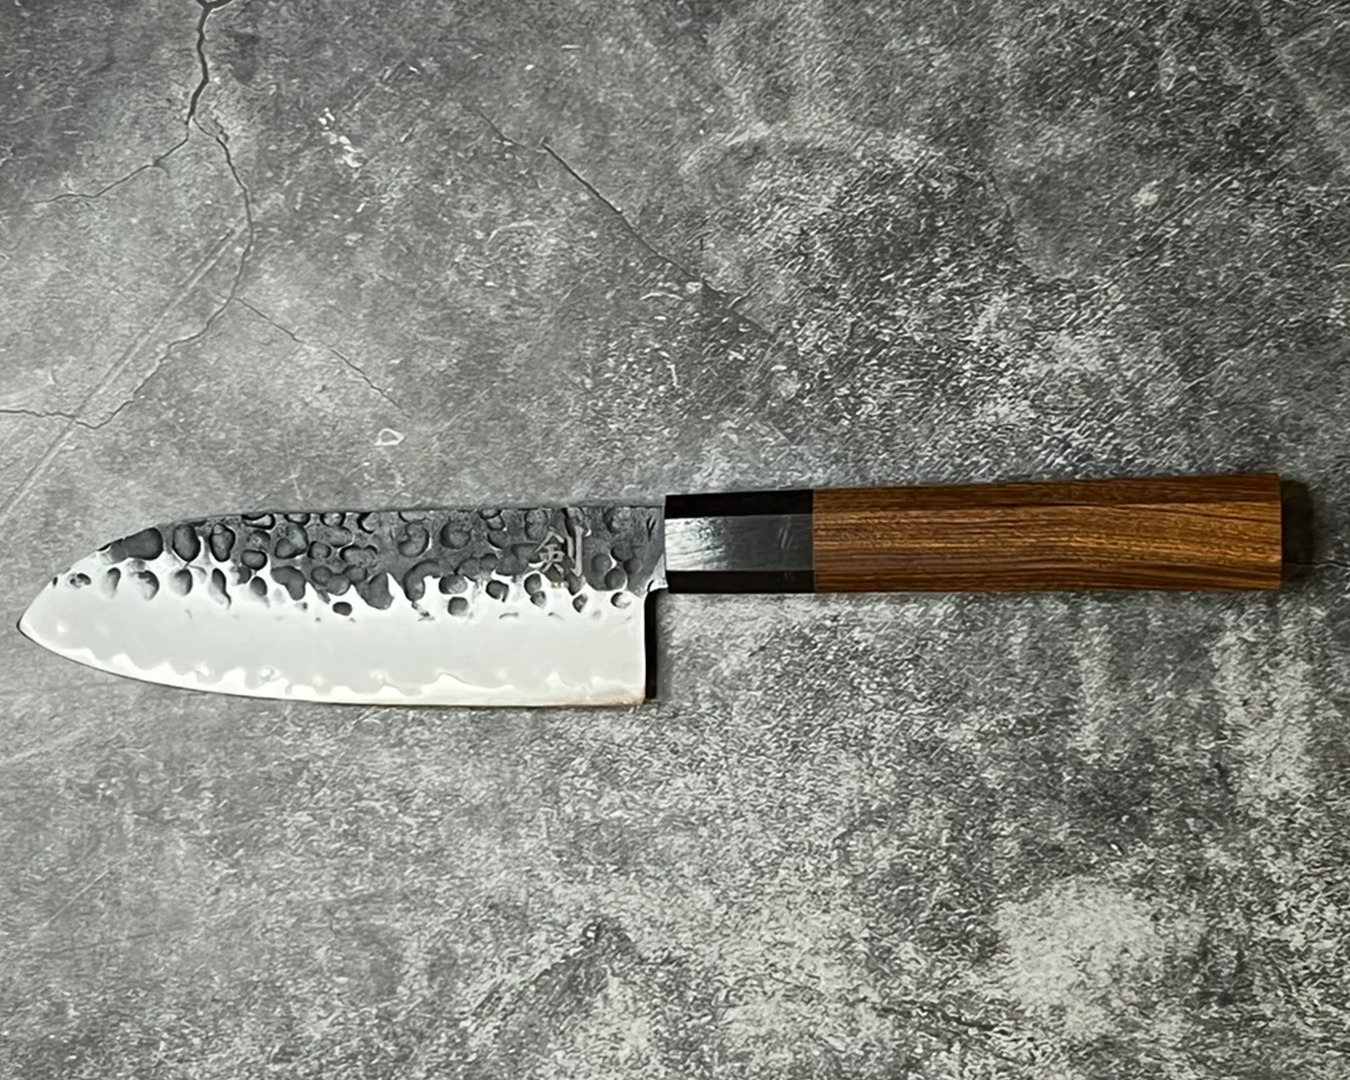 5" Santoku Knife